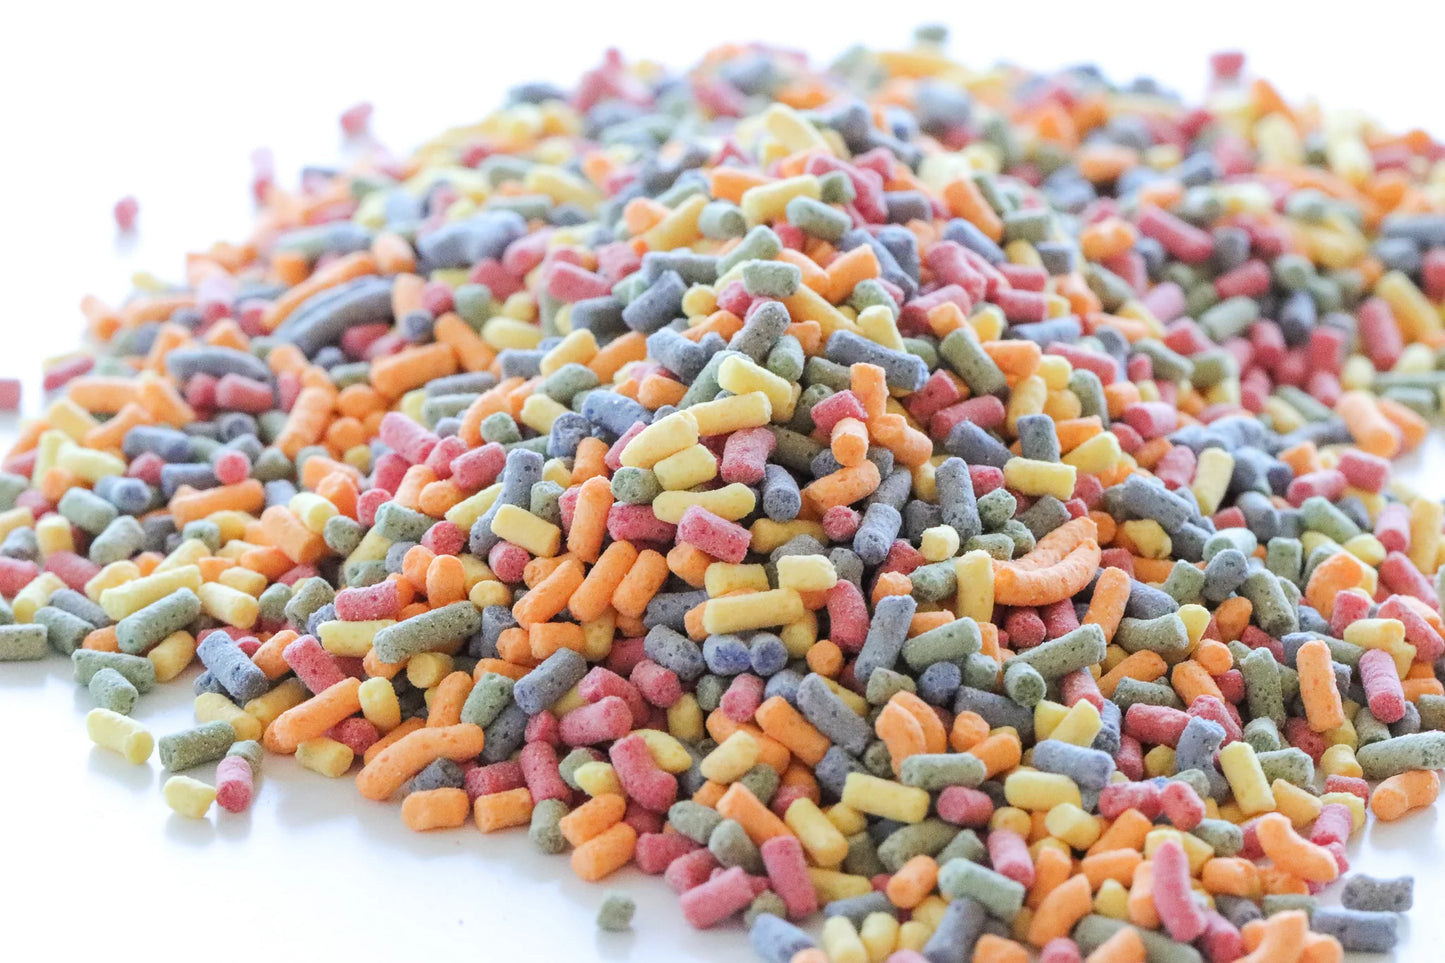 Keto Rainbow Sprinkles - Gluten Free and No Added Sugar – Good Dee's